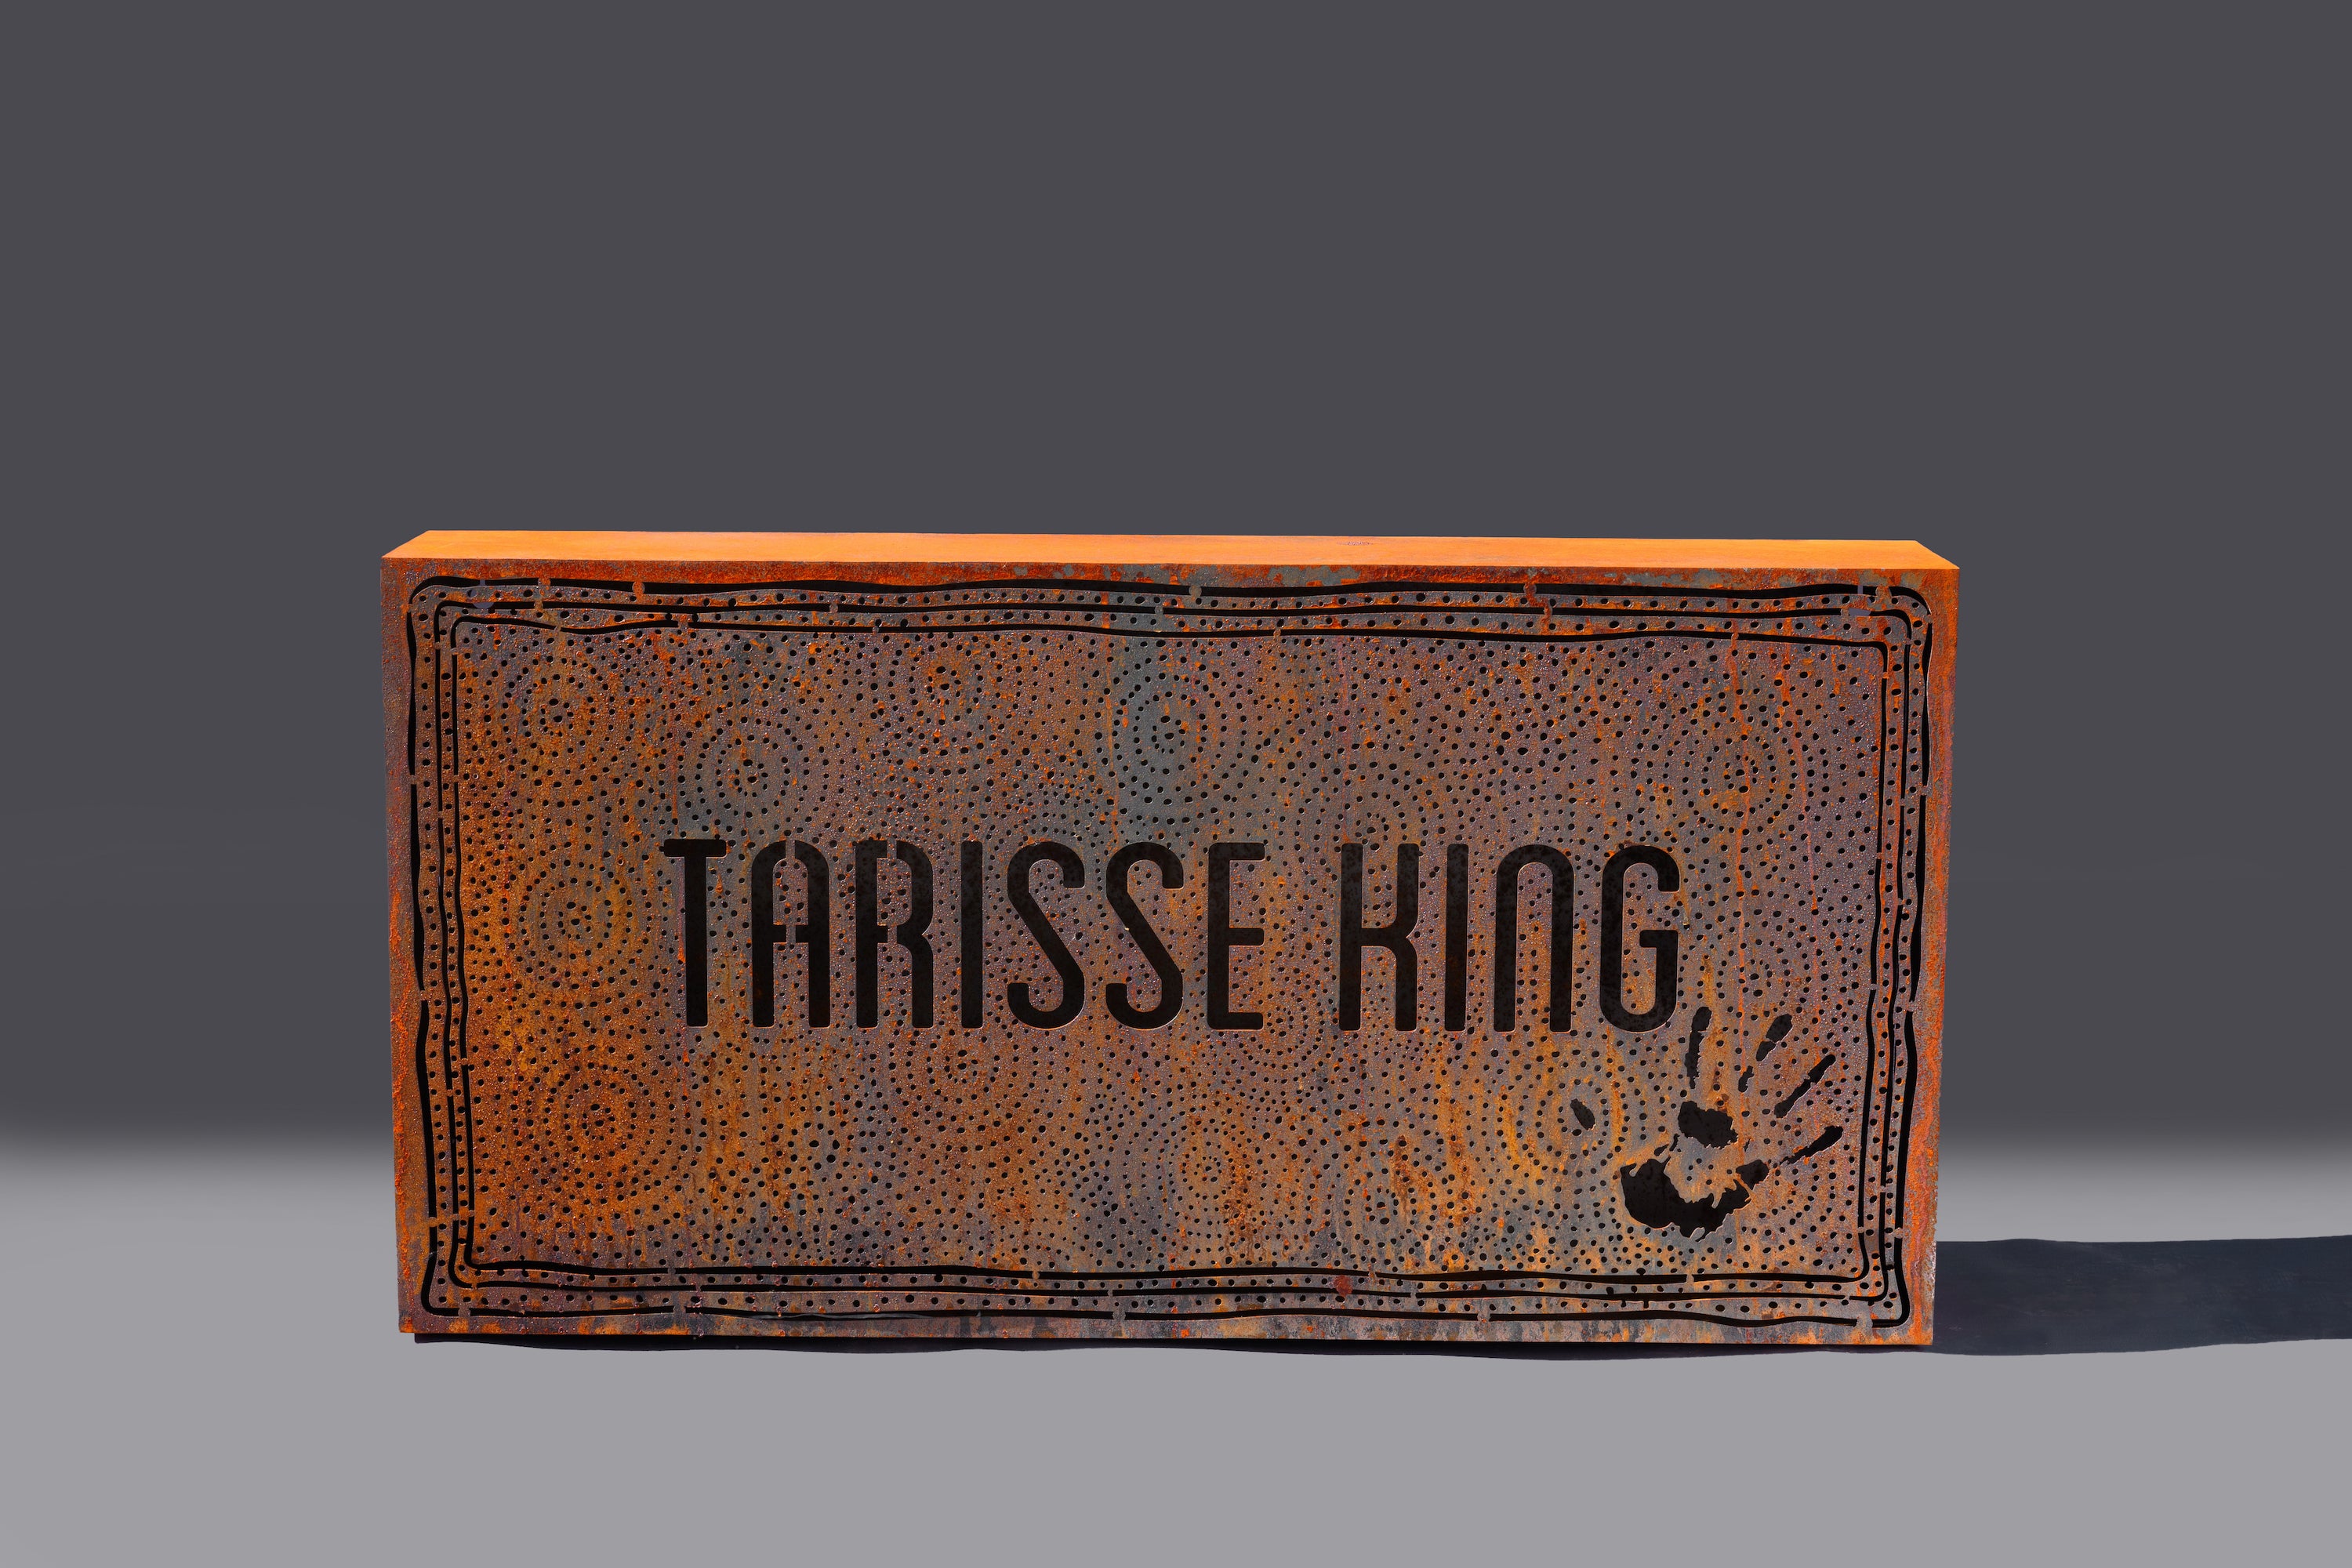 'Tarisse King' Light | 60x120x20cm